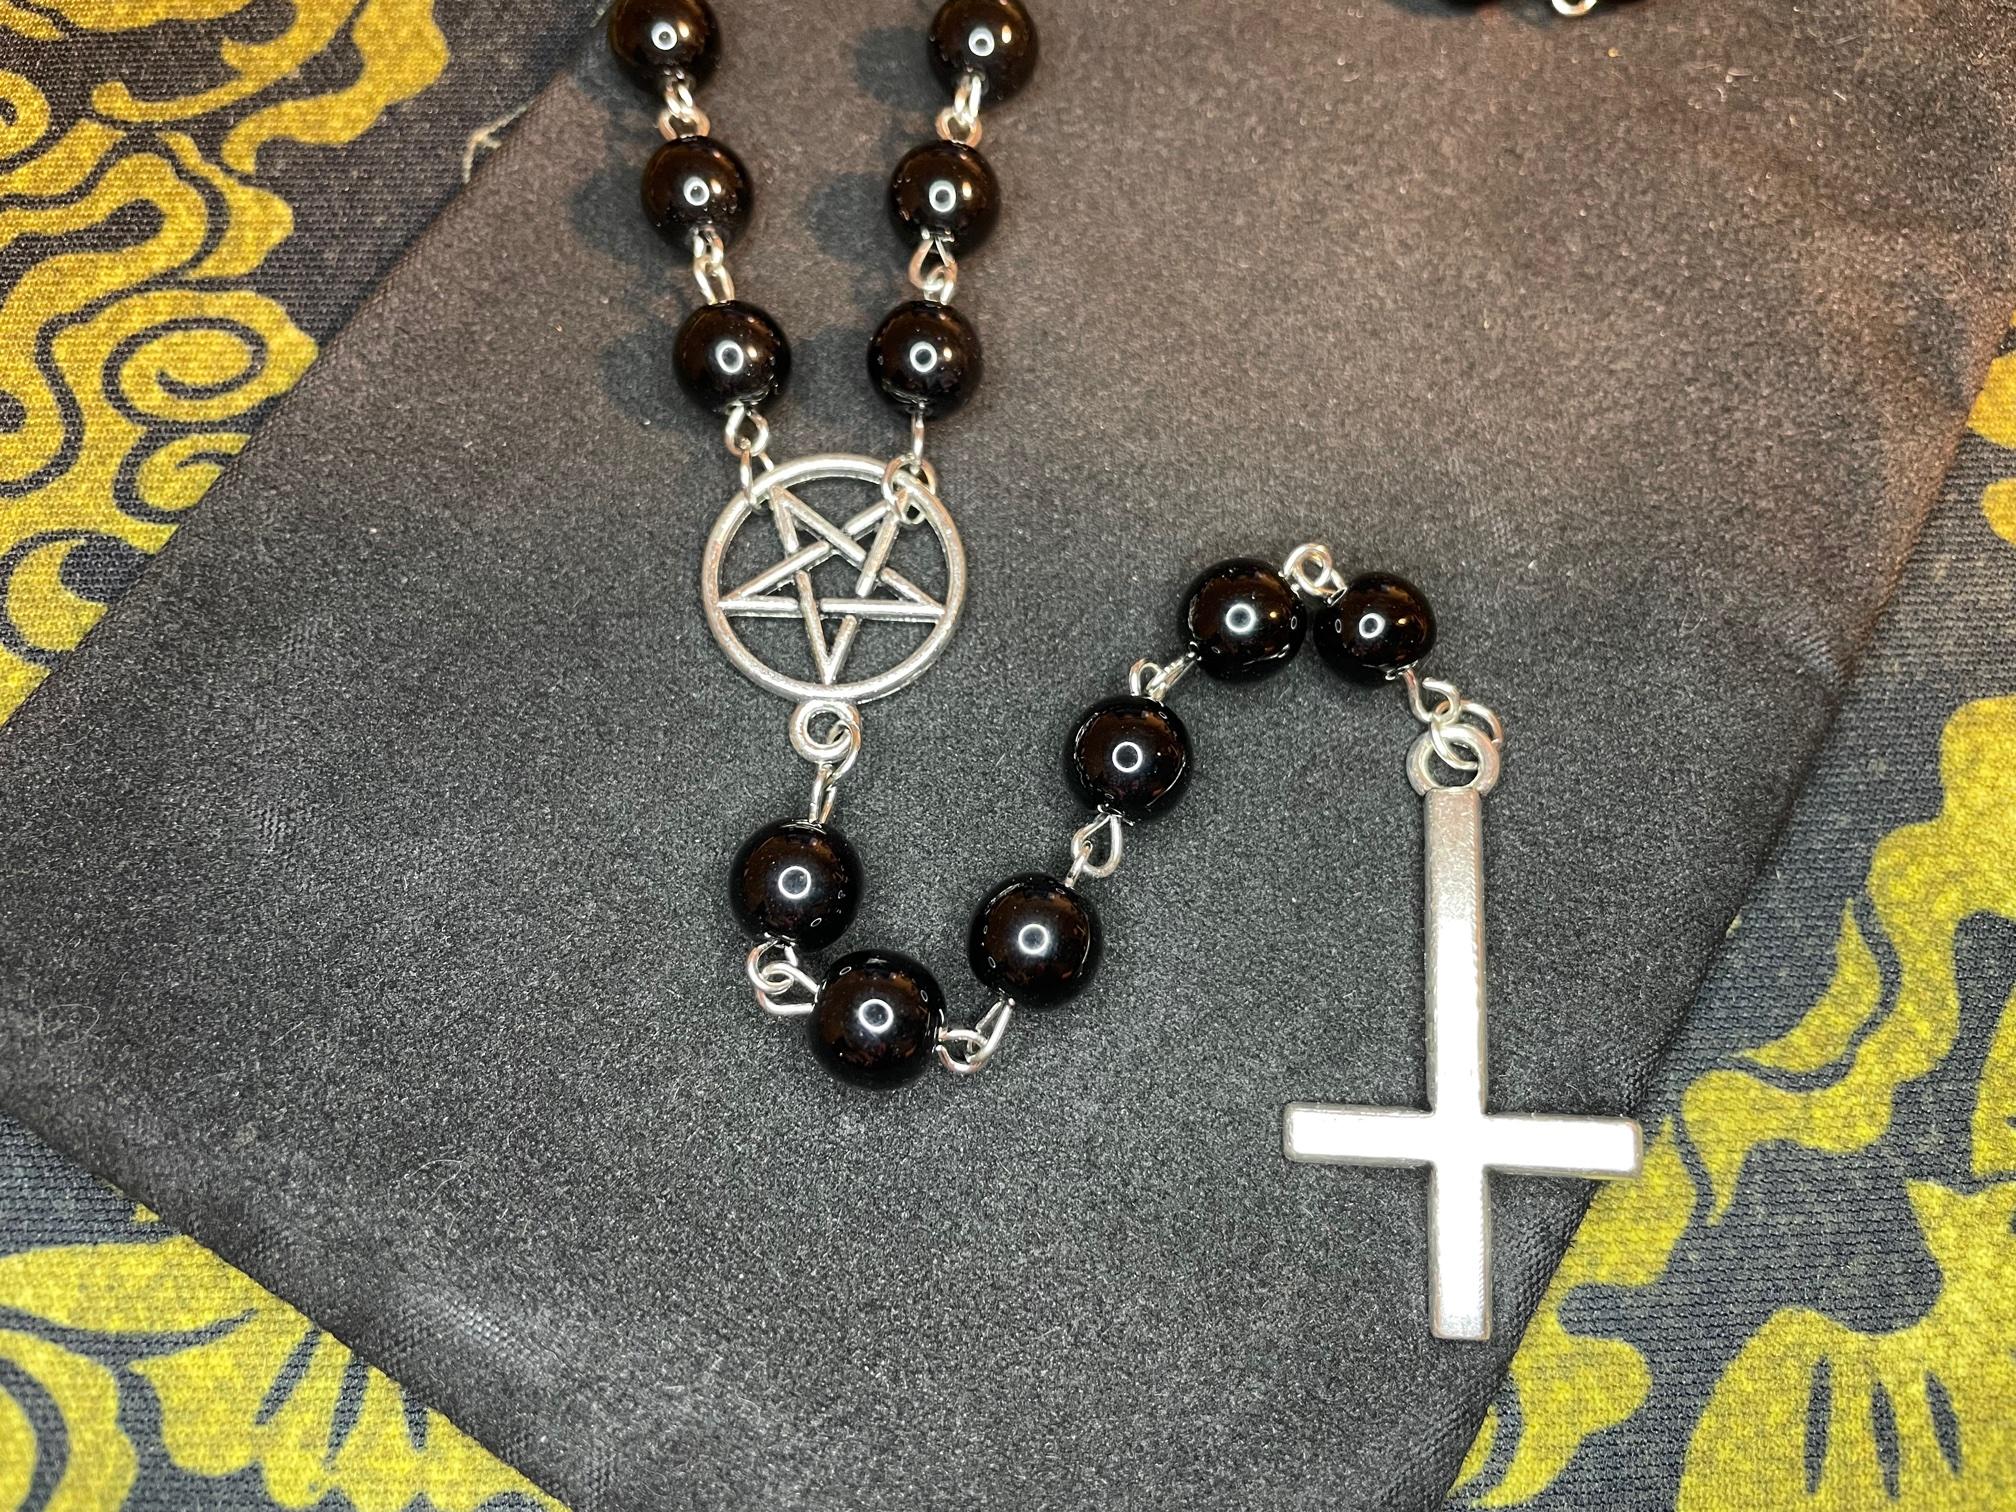 satanic rosary inverted pentagram upside down cross pendant necklace